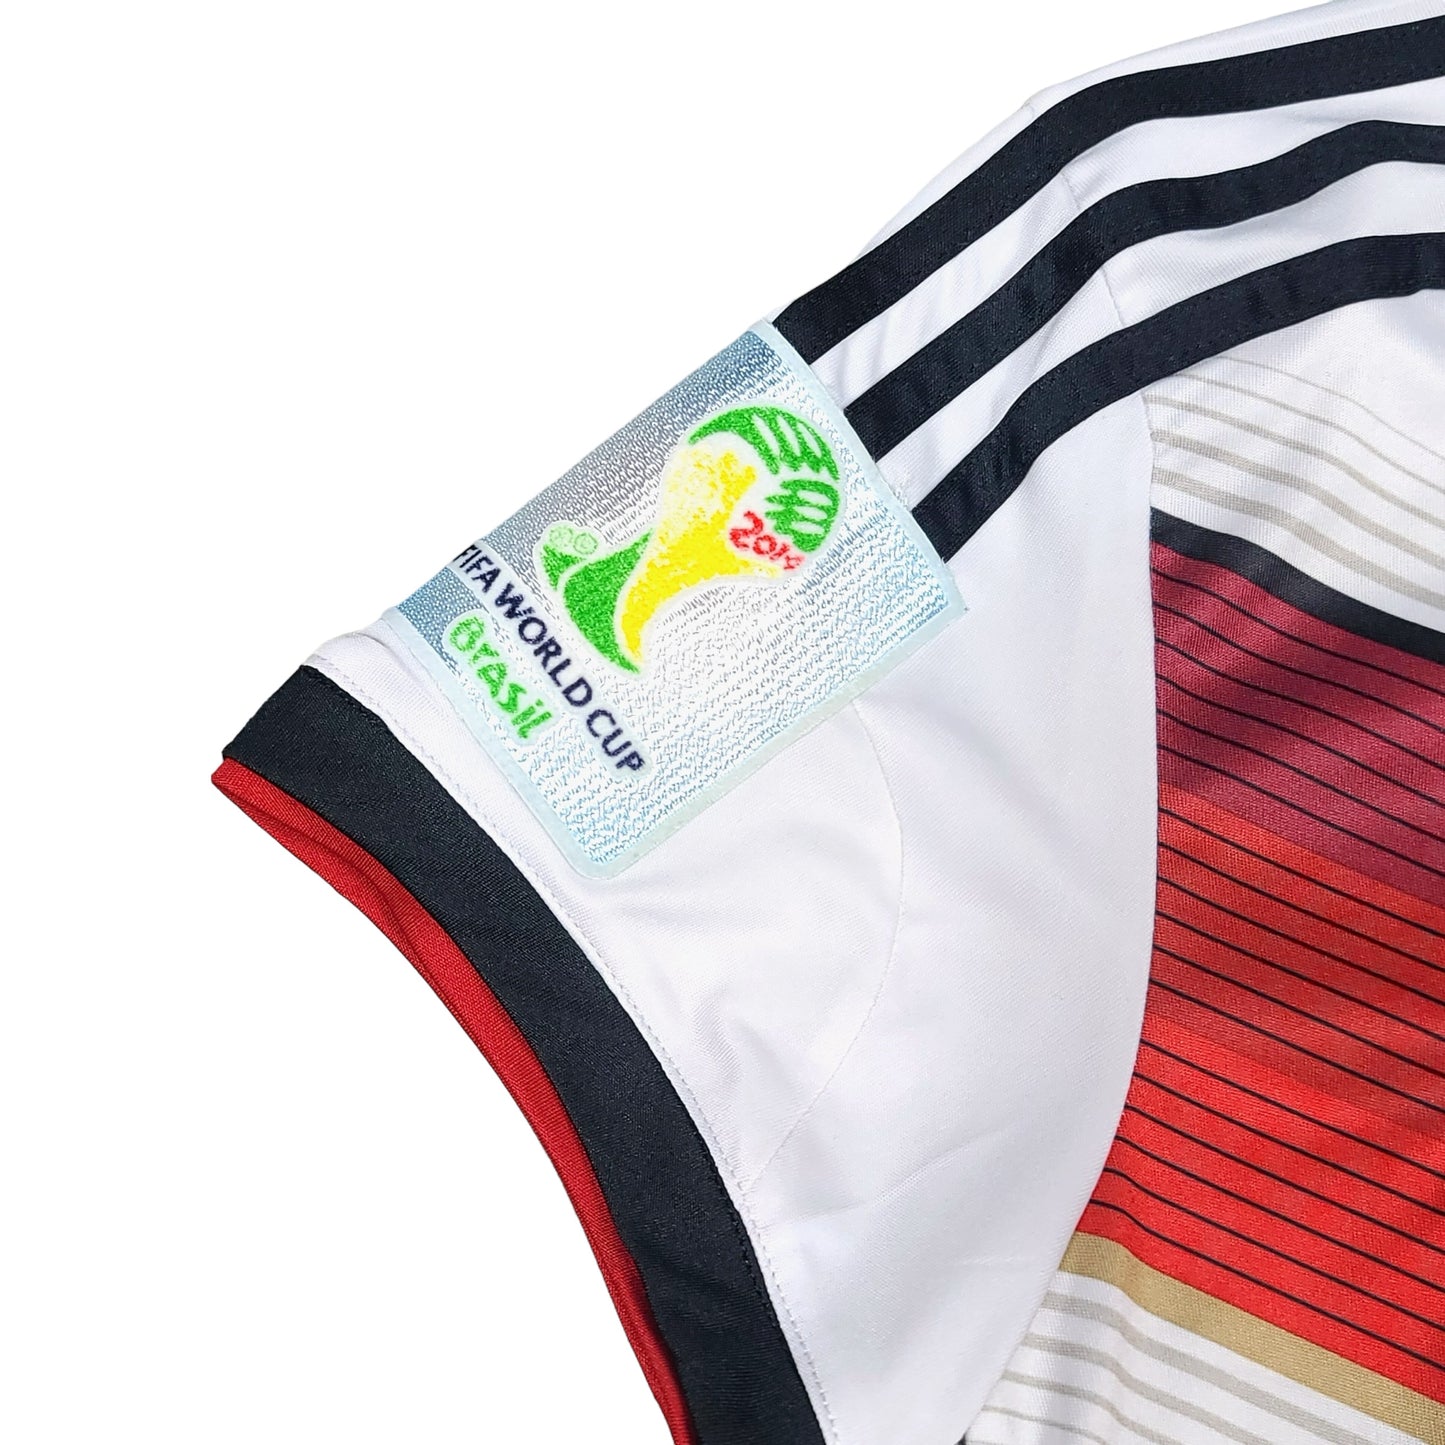 Germany 2014 Home adidas Soccer Jersey (Women's Cut)